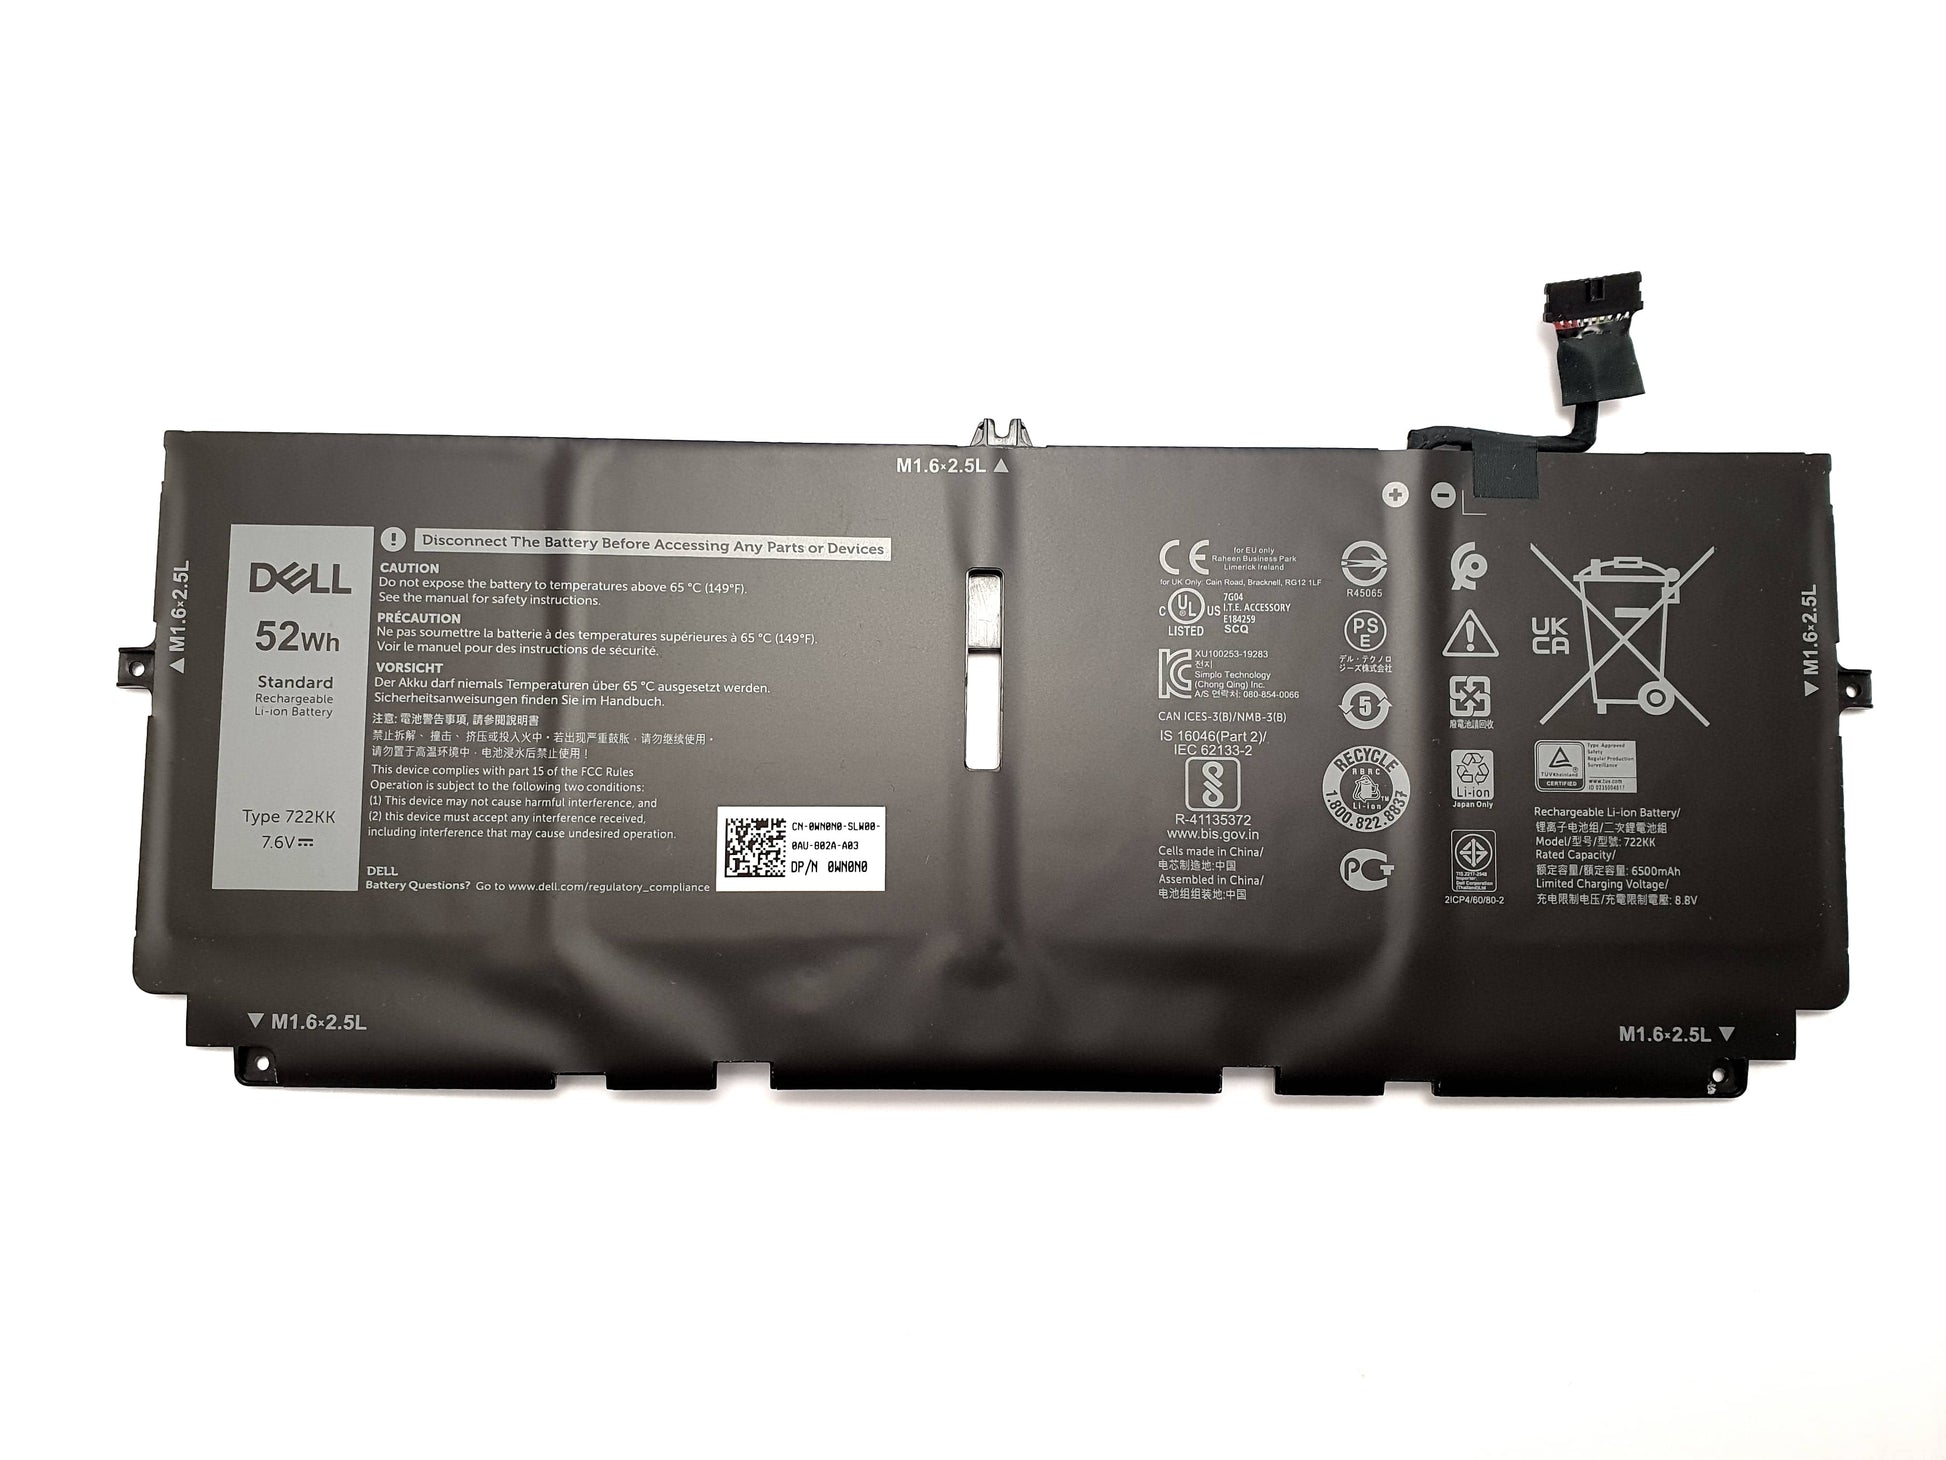 Genuine Dell replacement battery for XPS 9300 52Wh 7.6V 4 Cell Laptop Battery FP86V 722KK 